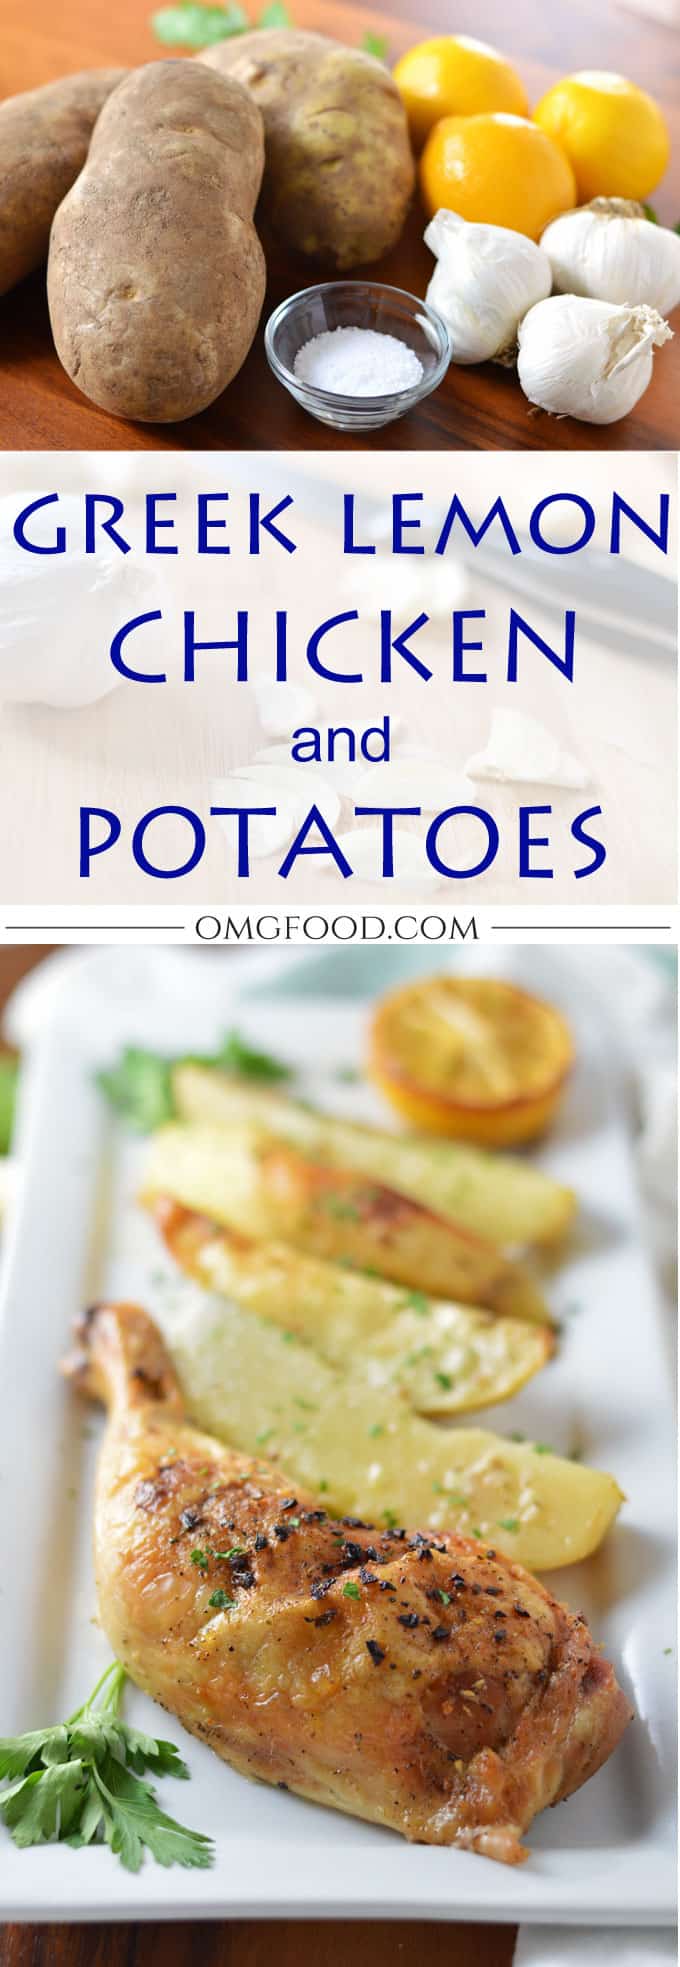 Greek Lemon Chicken and Potatoes | OMGfood